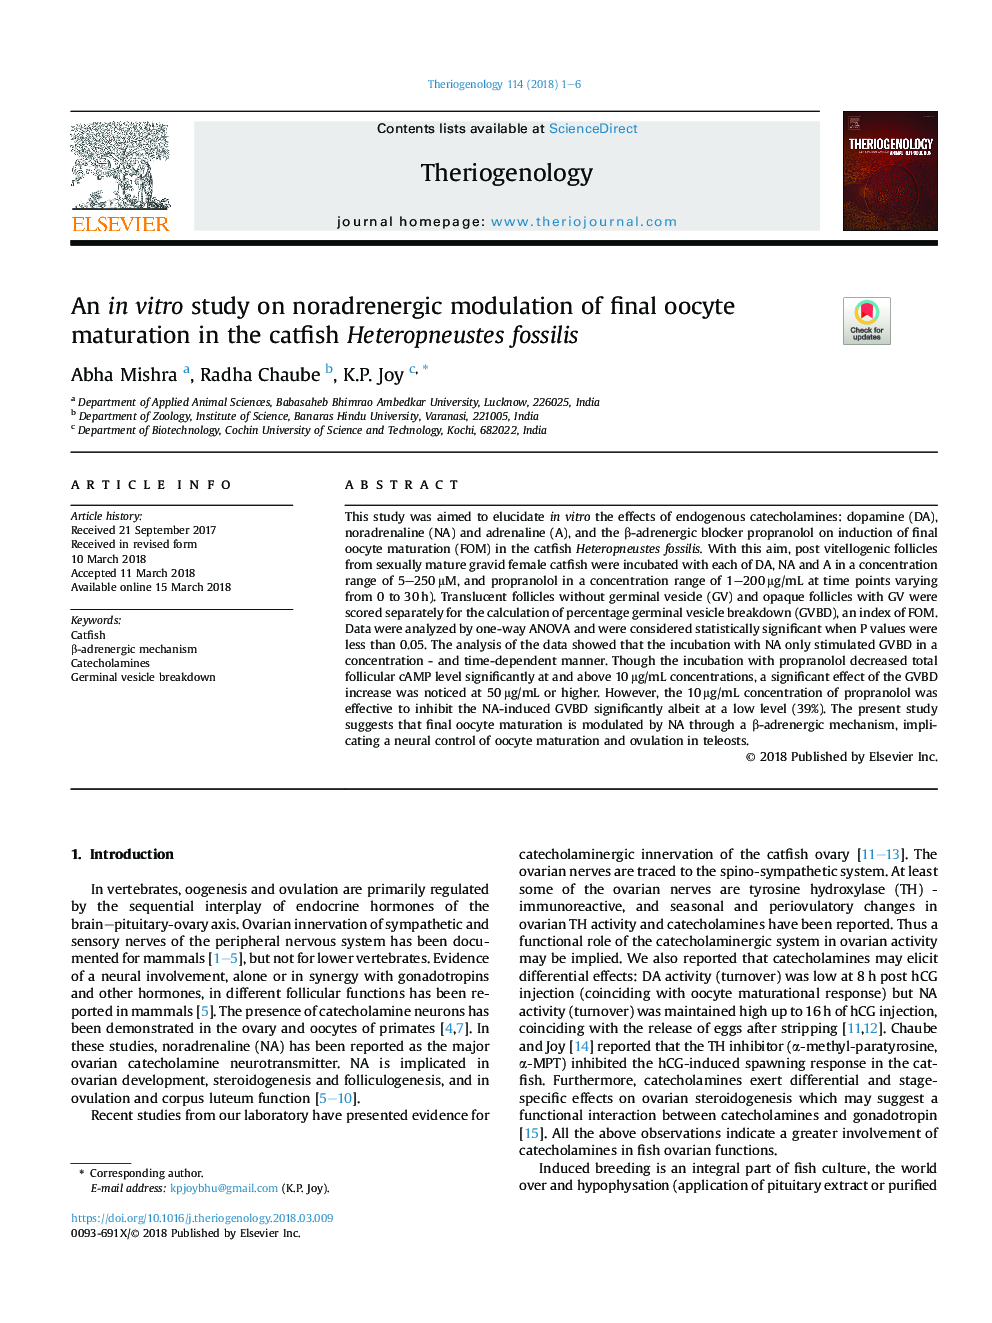 An inÂ vitro study on noradrenergic modulation of final oocyte maturation in the catfish Heteropneustes fossilis